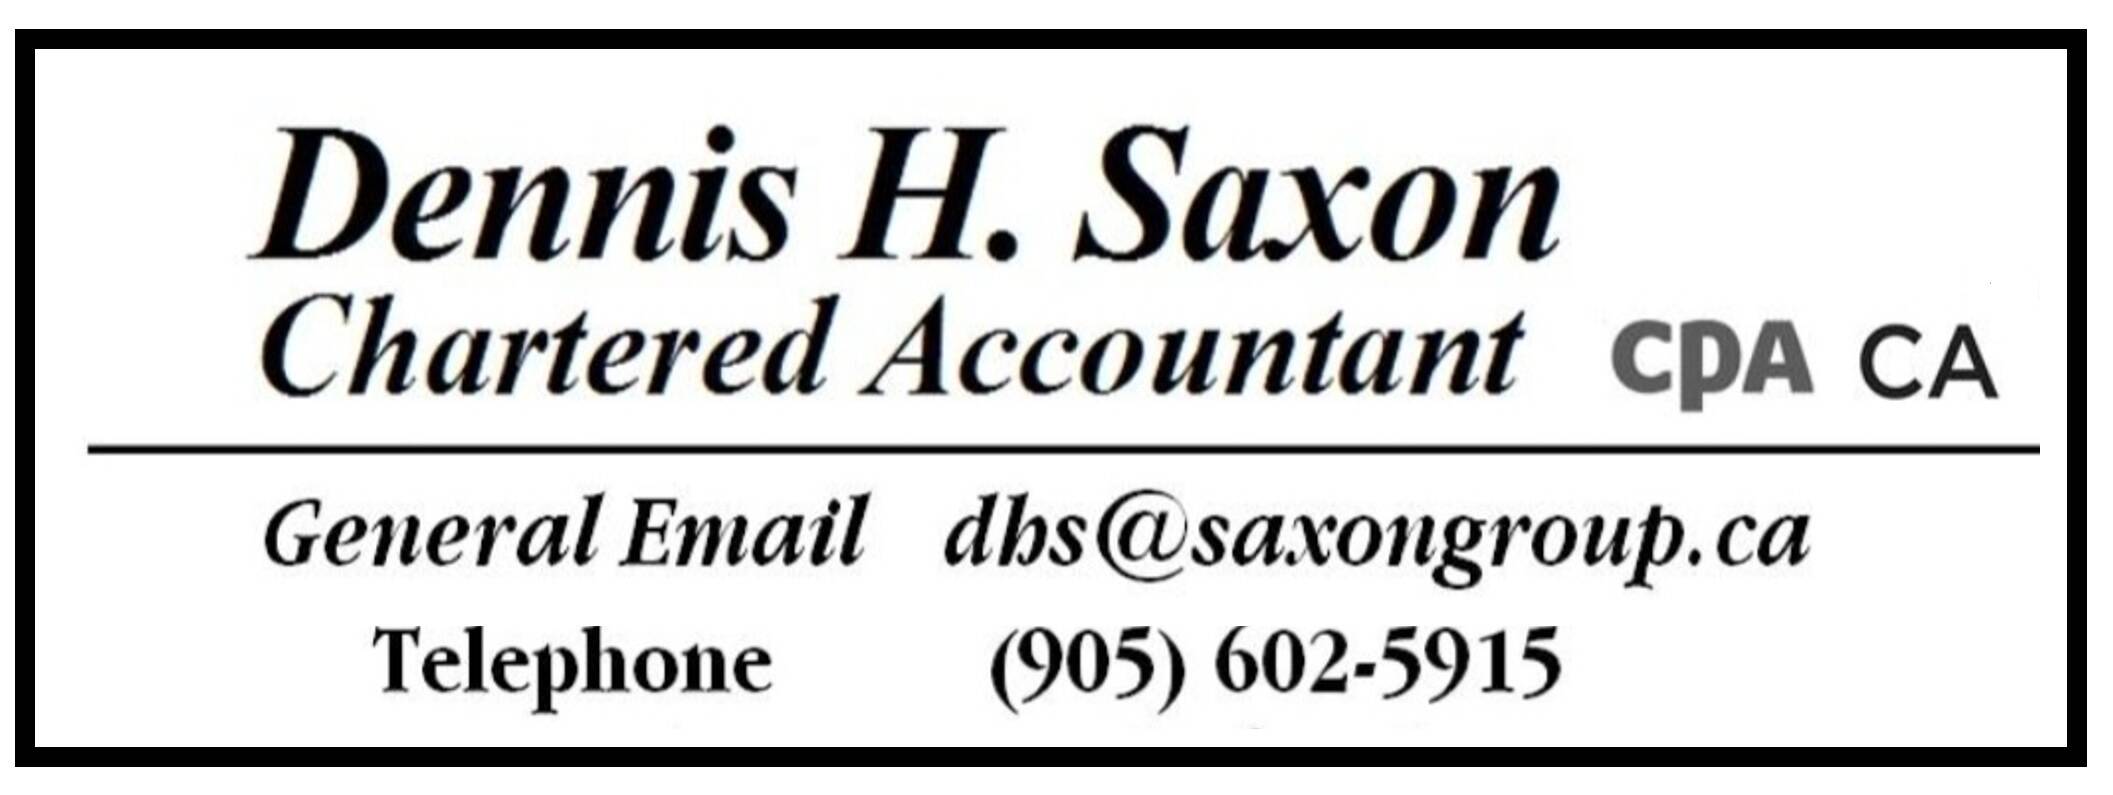 Dennis H. Saxon, Chartered Accountant